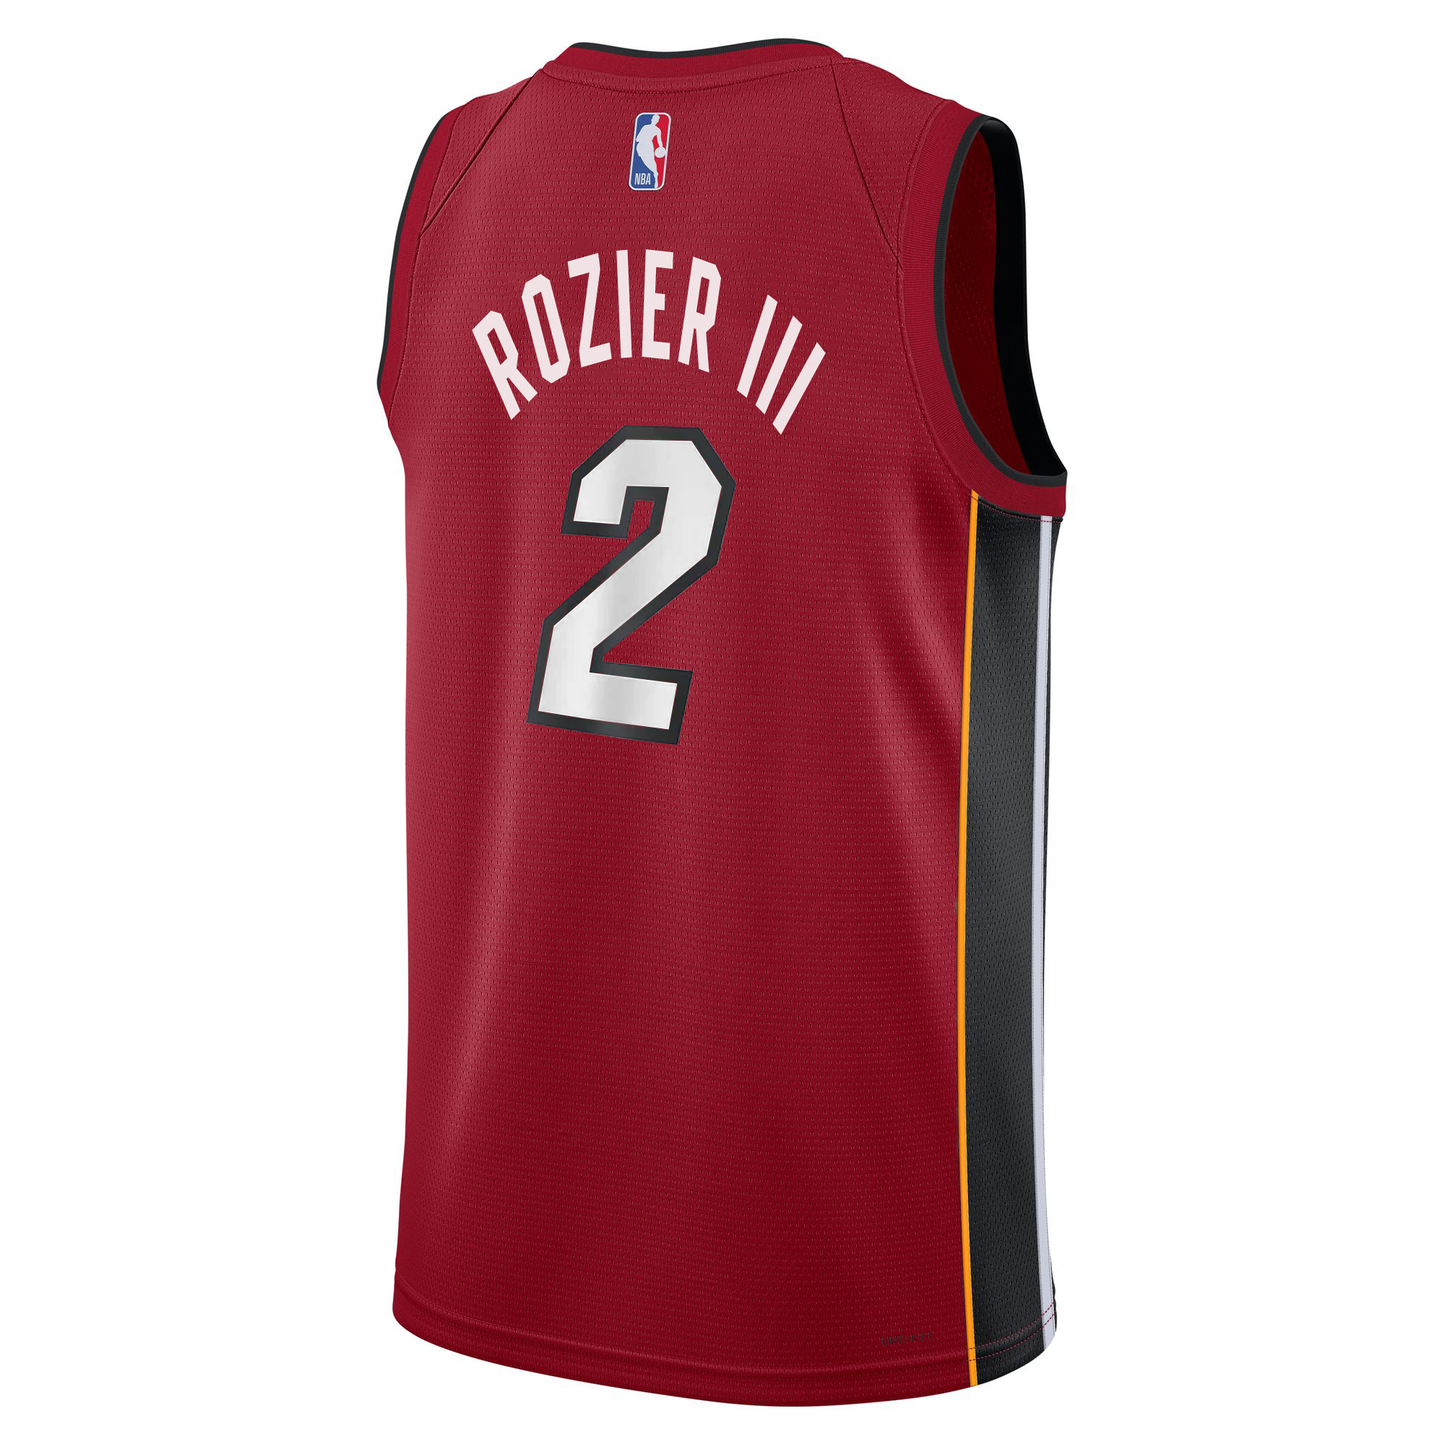 Terry Rozier III Nike Jordan Brand Miami HEAT Statement Red Swingman Jersey